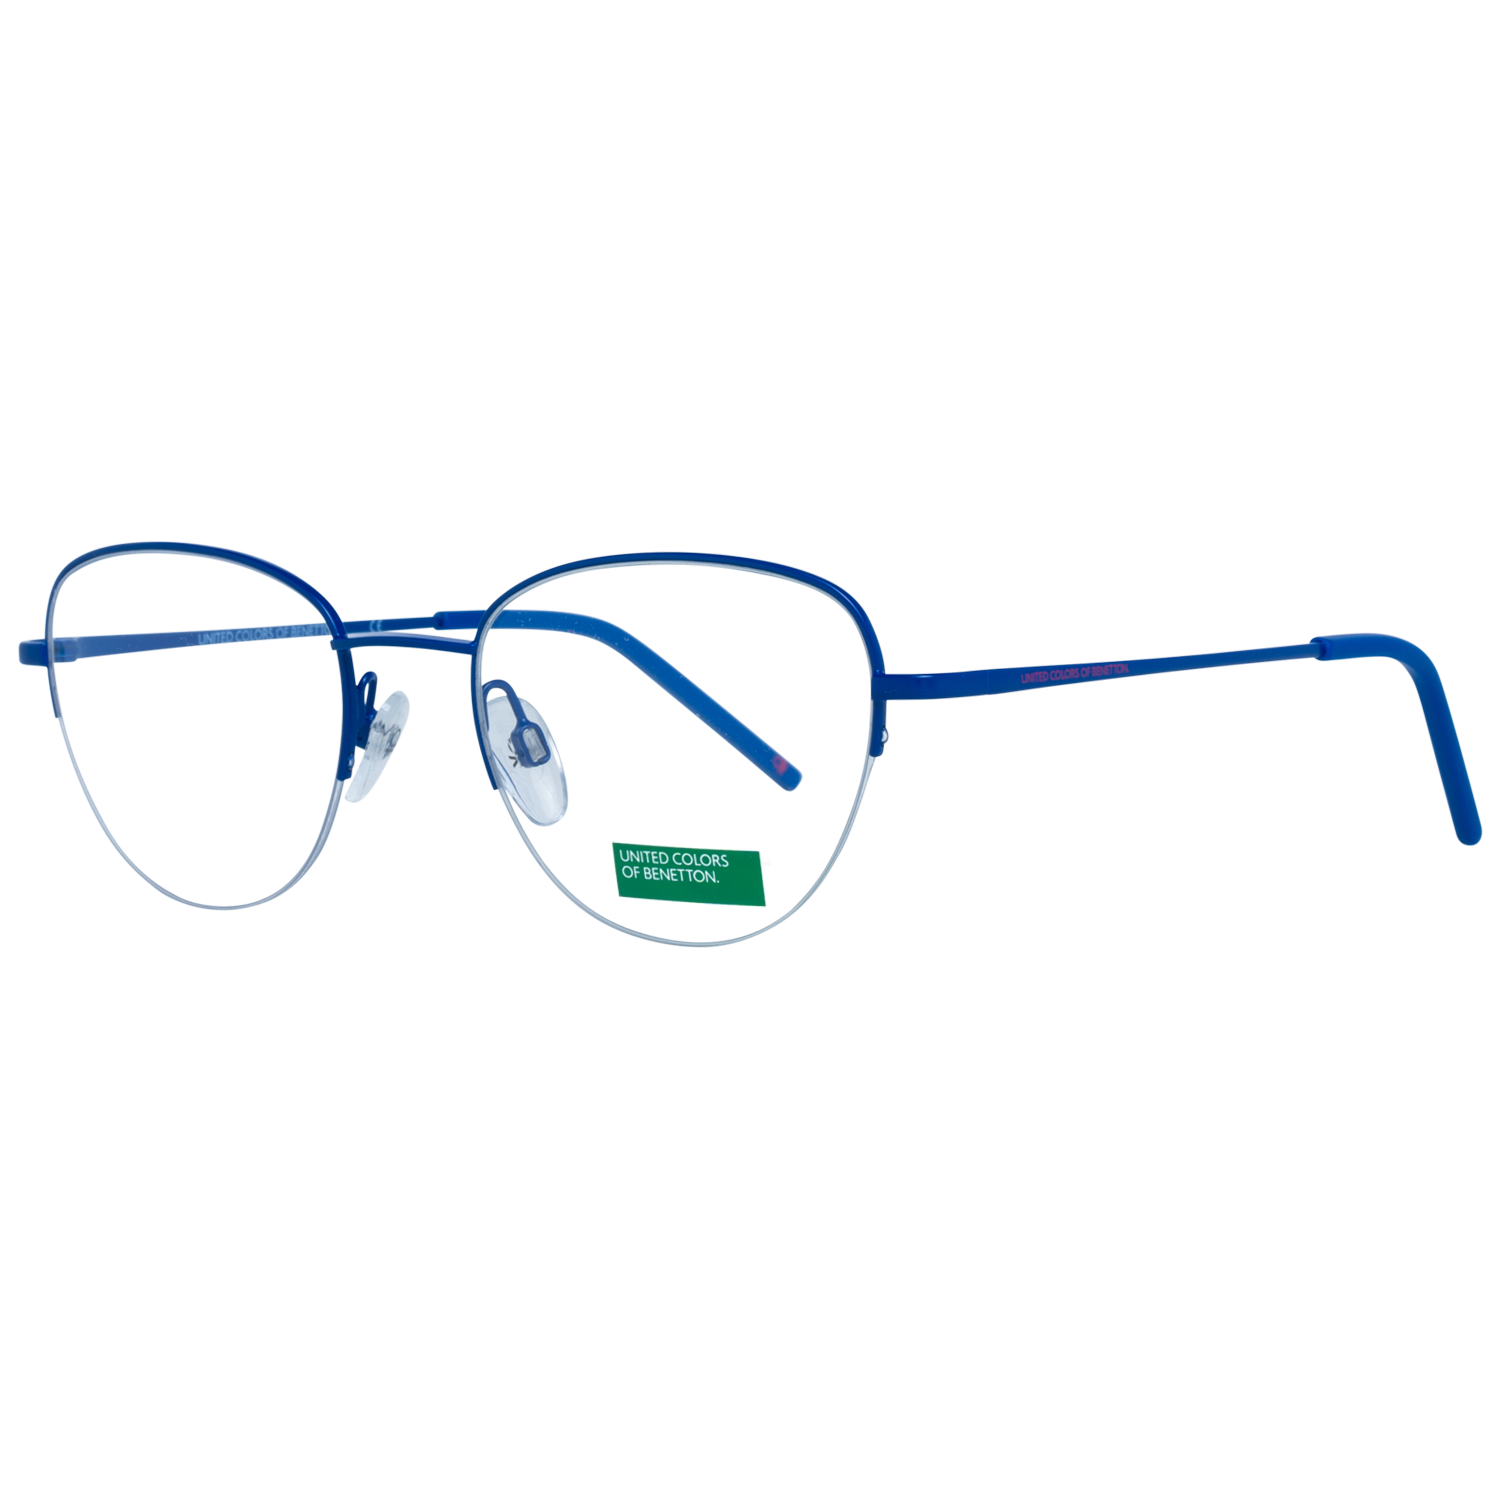 Benetton Frames Benetton Optical Frame BEO3024 686 50 Eyeglasses Eyewear UK USA Australia 